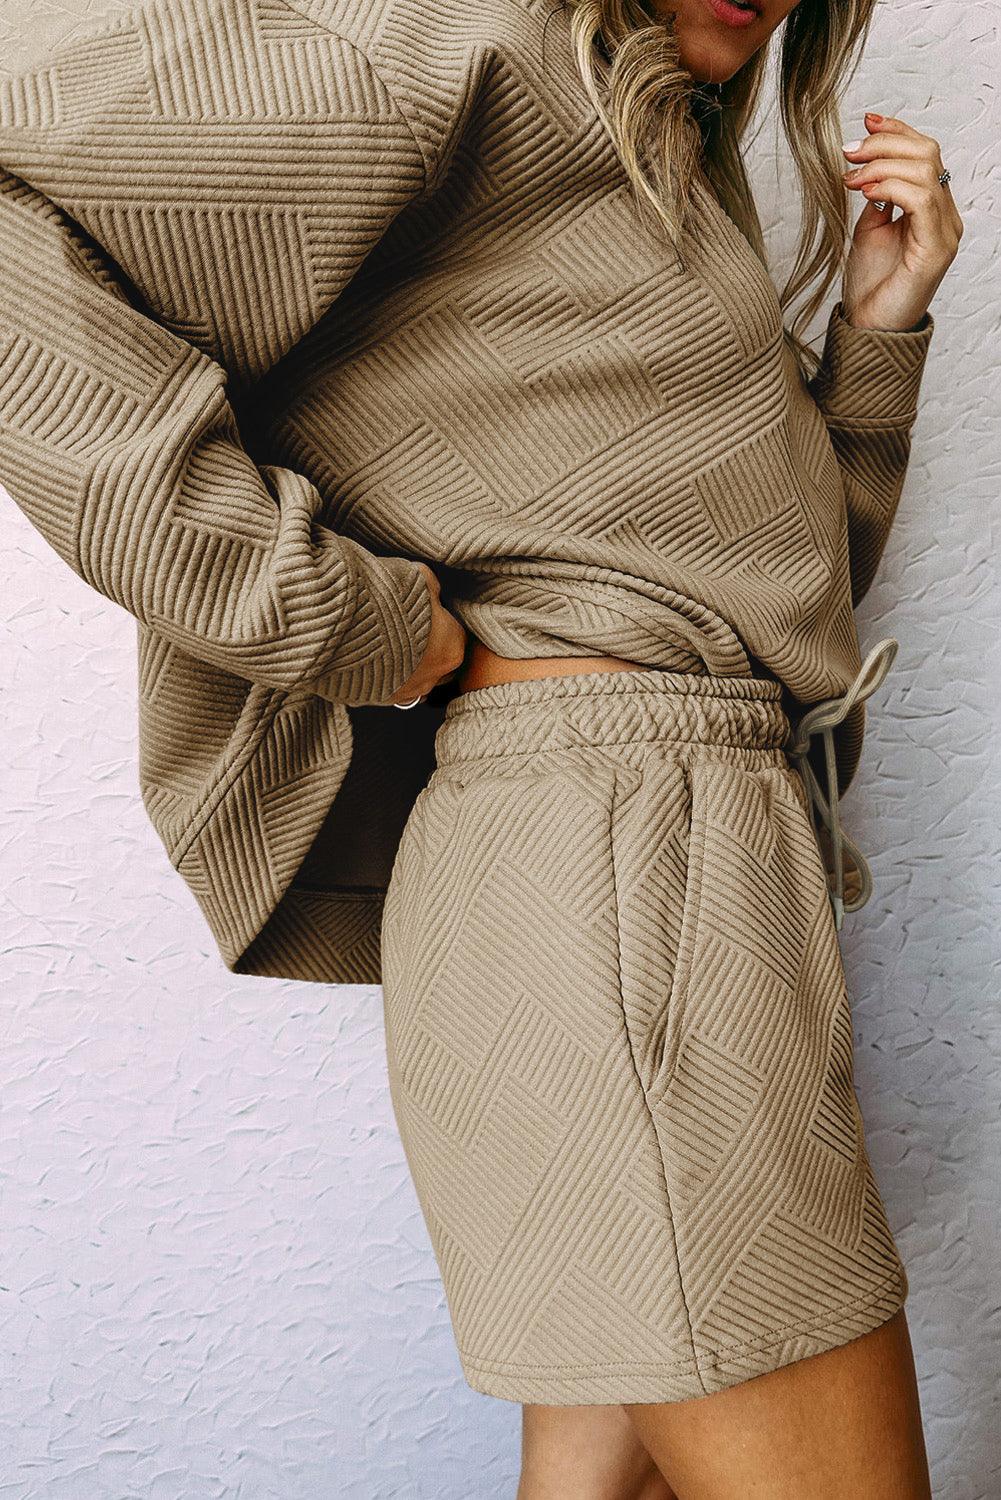 Apricot khaki Textured Long Sleeve Top and Drawstring Shorts Set - L & M Kee, LLC